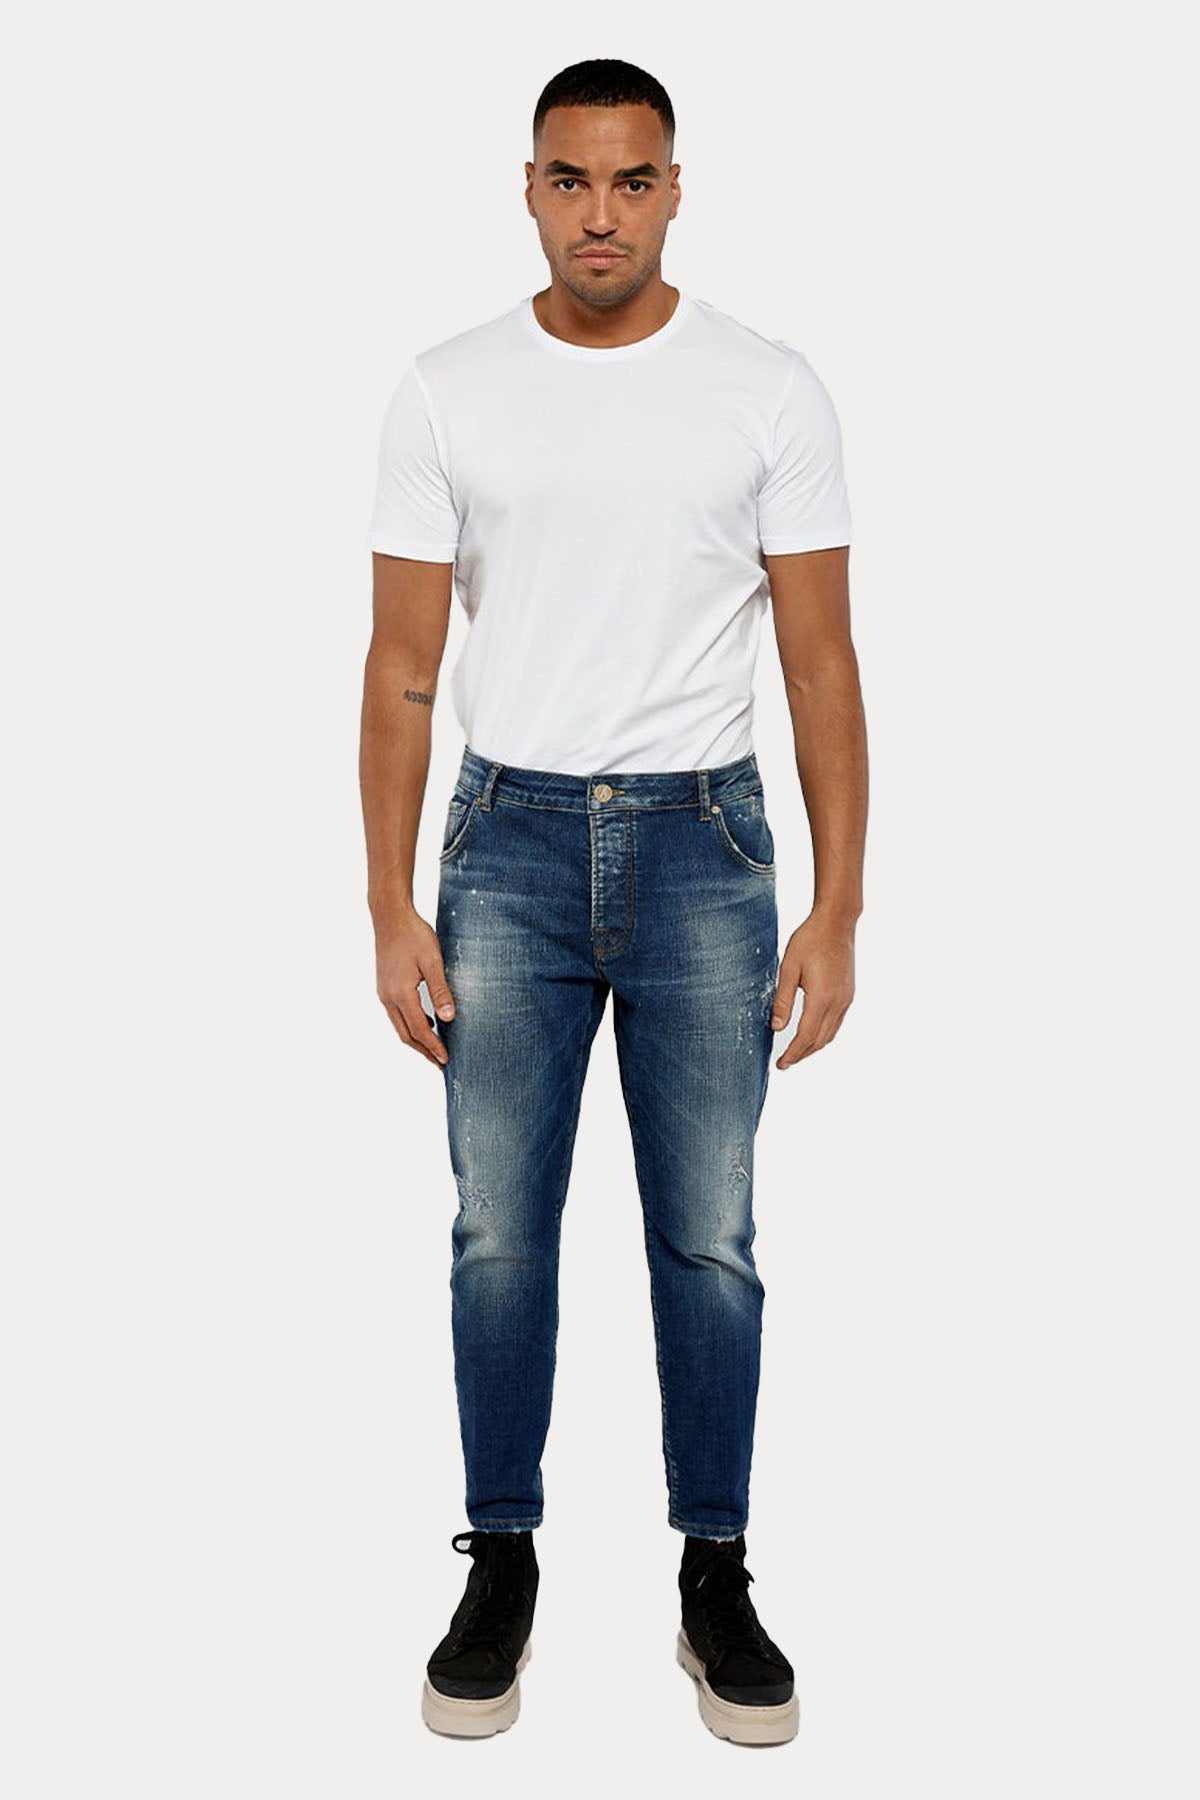 Goldgarn Neckarau Twisted Fit Jeans-Libas Trendy Fashion Store